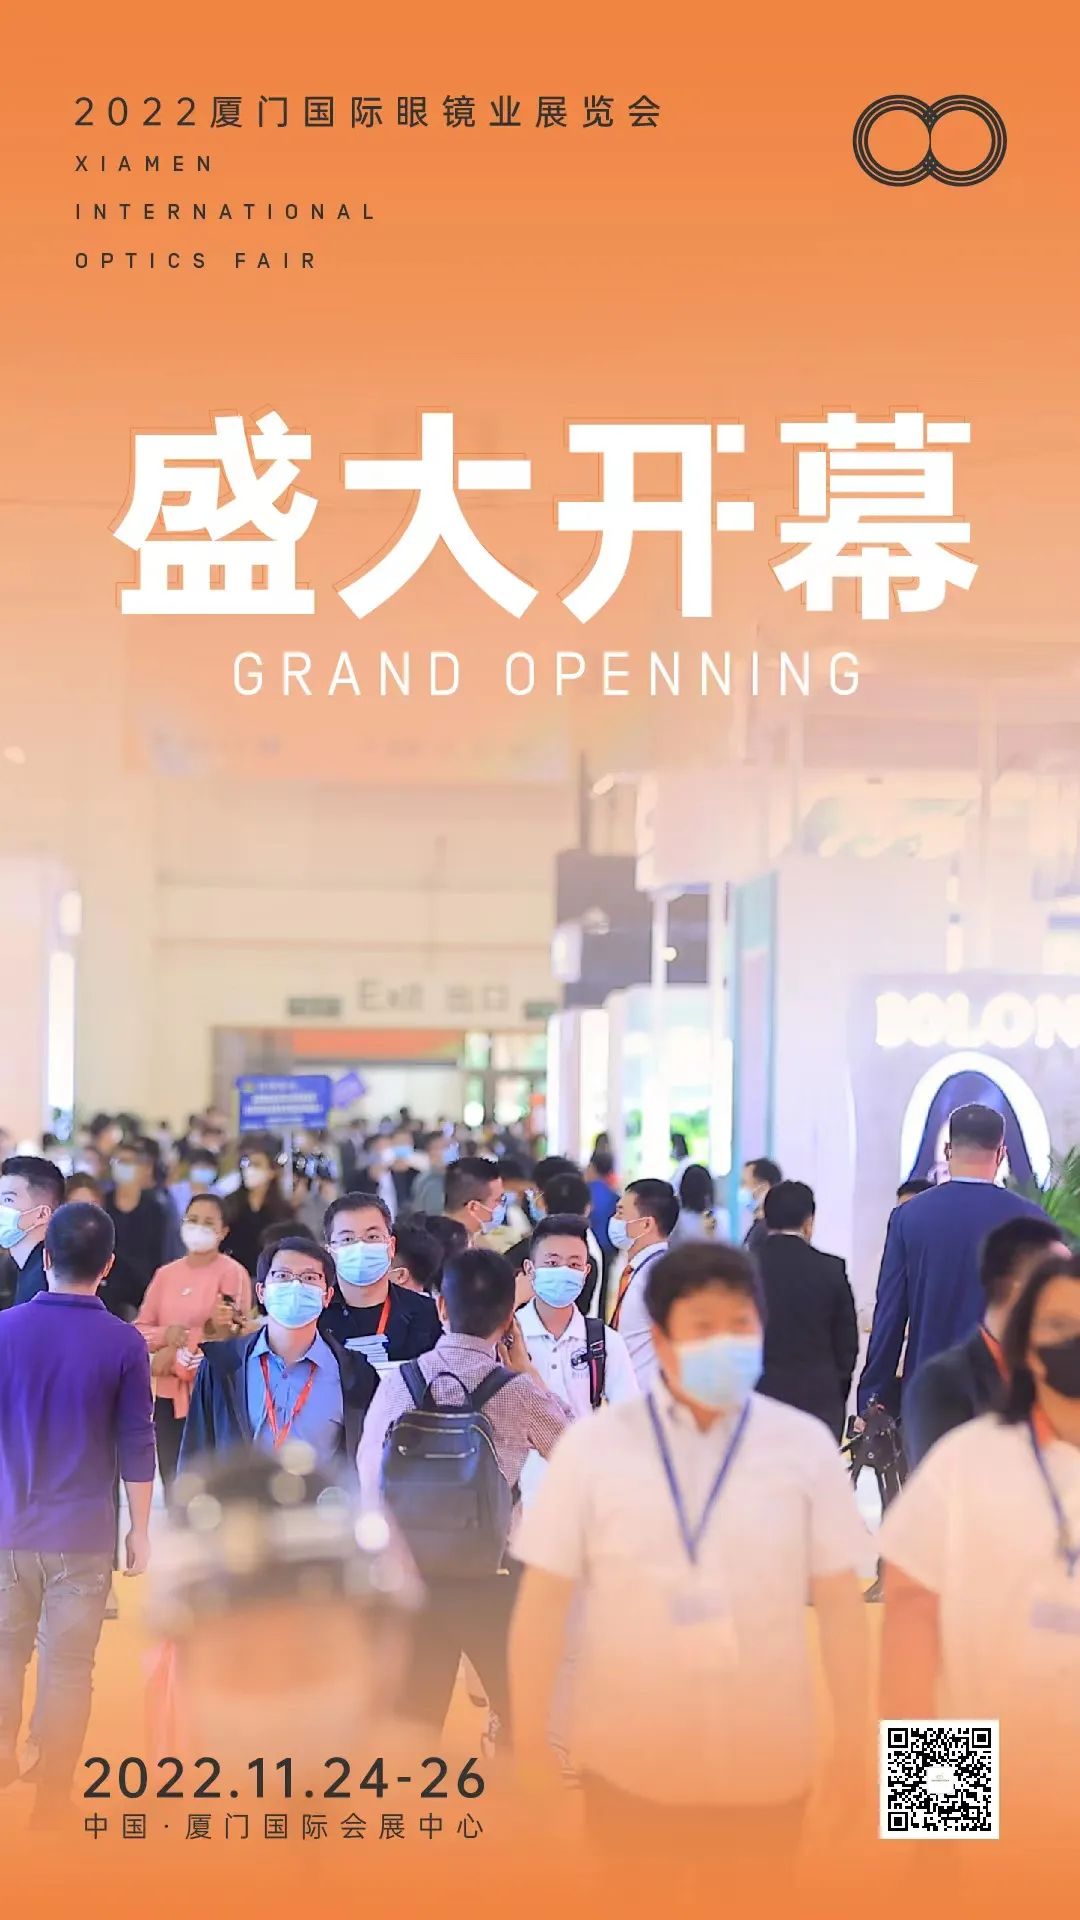 The 2022 Xiamen International Optics Fair opens today!